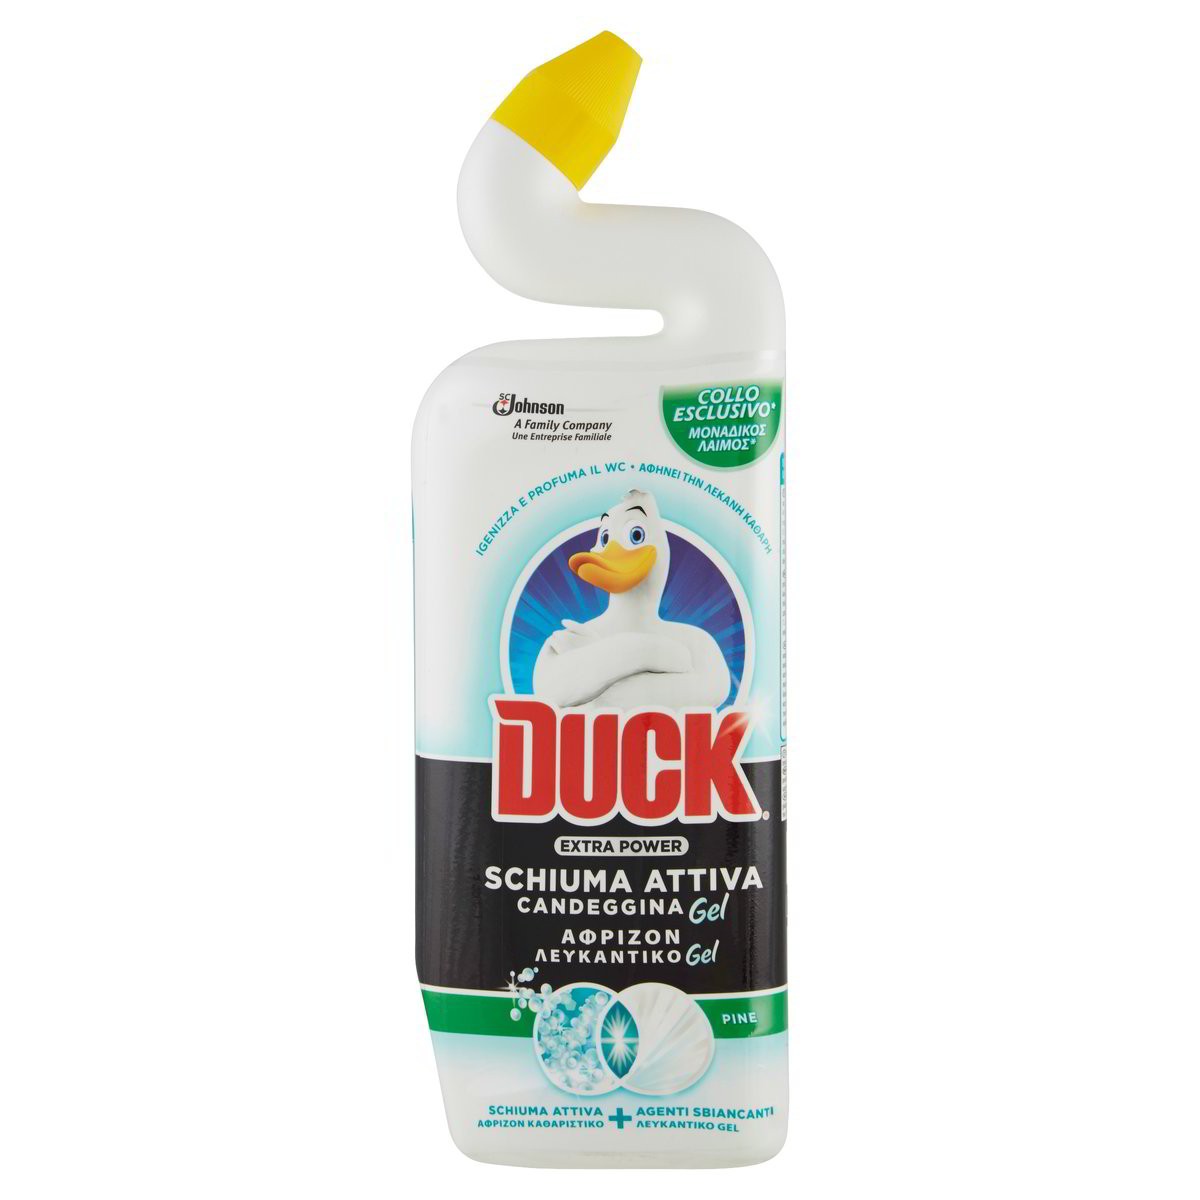 Duck Detergente Schiuma Attiva Candeggina Gel